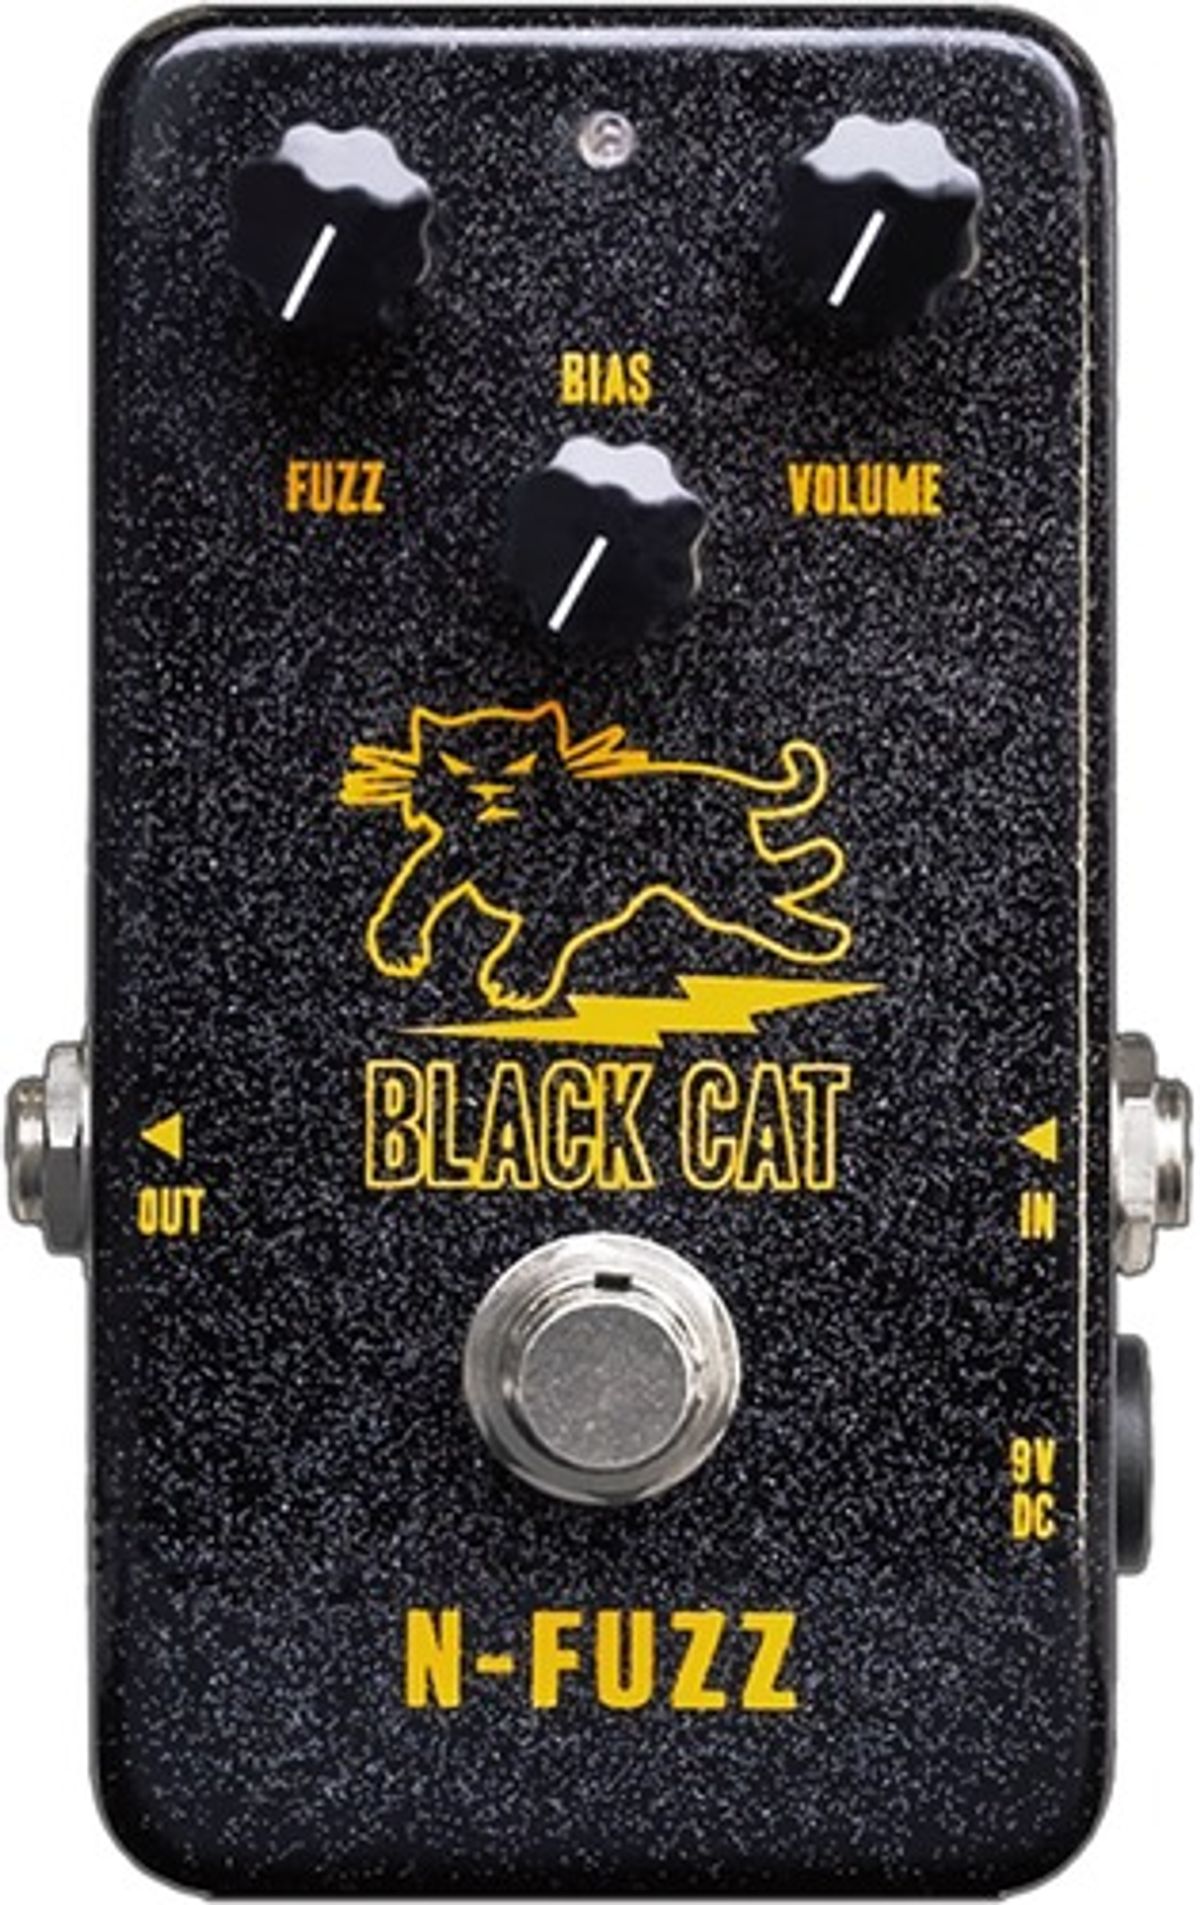 Black Cat Pedals Announces the N-Fuzz